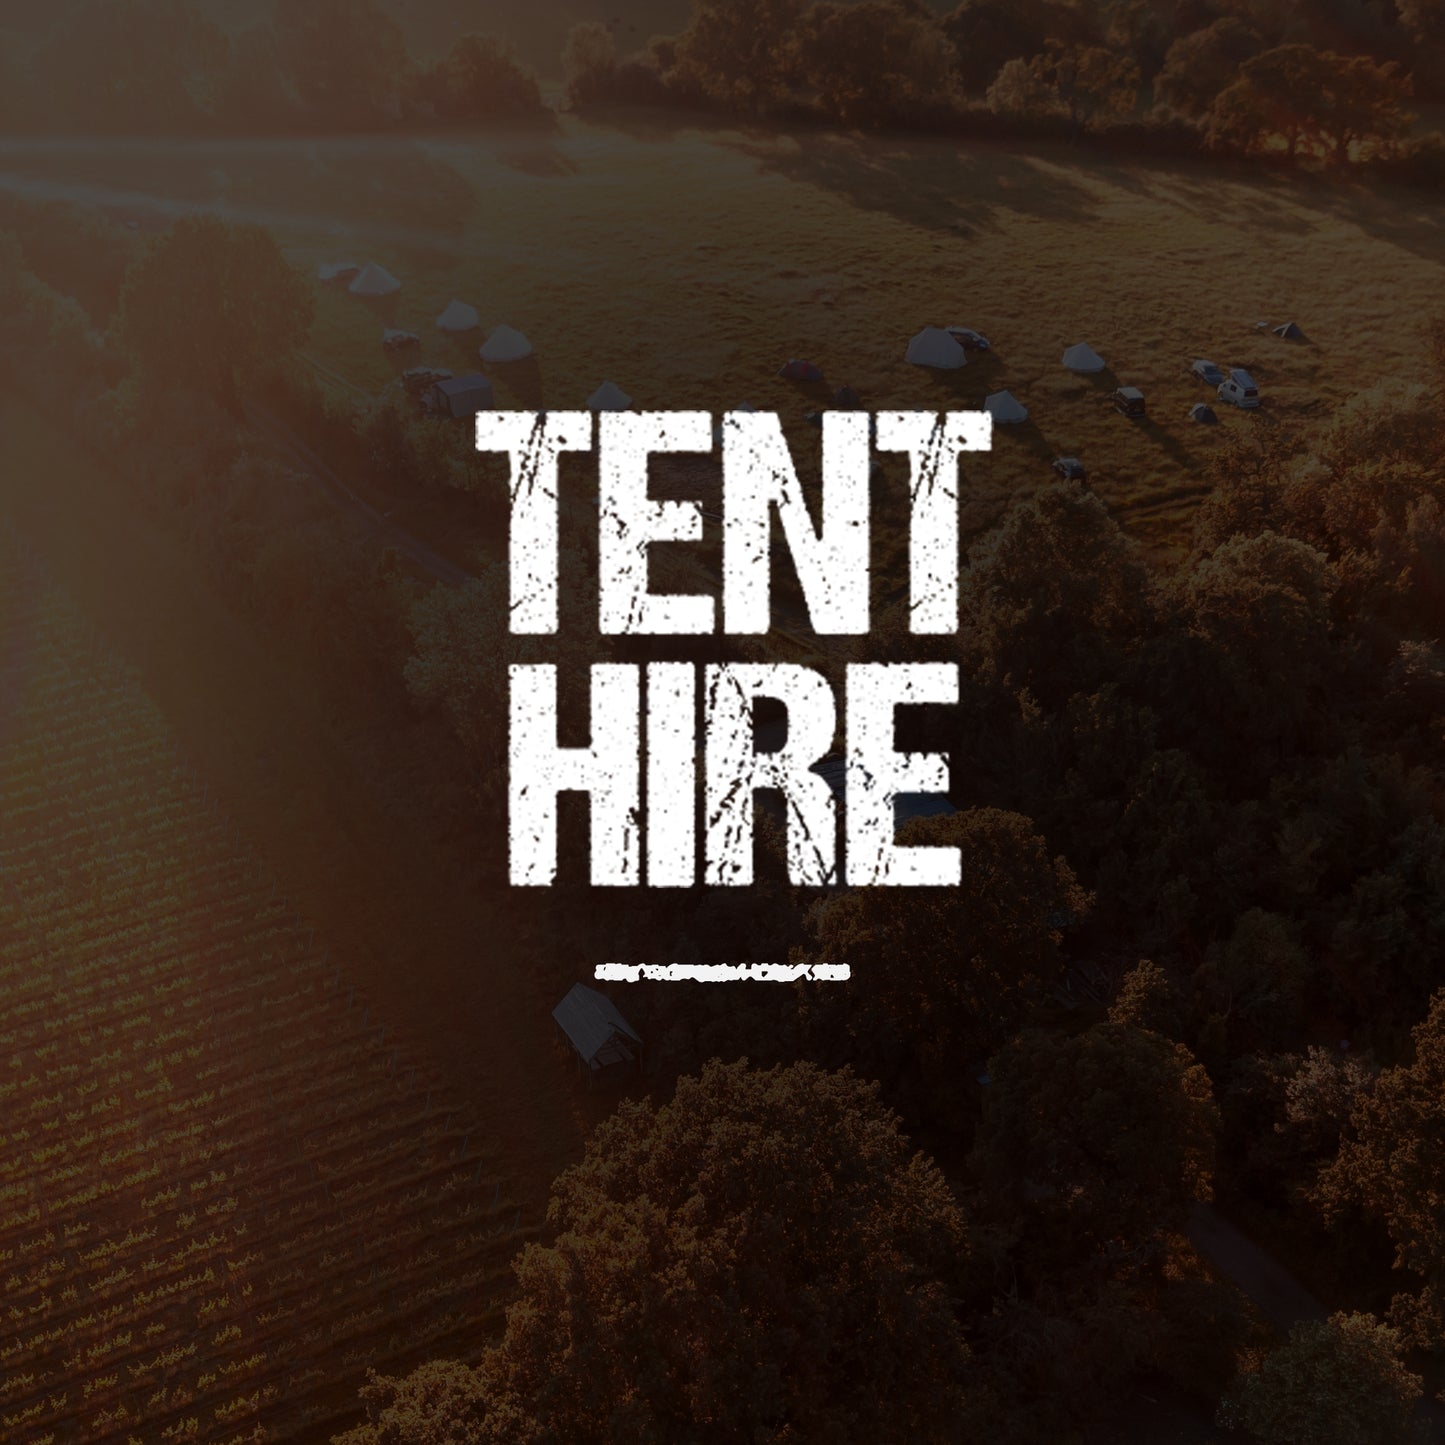 Full Event: Tent hire